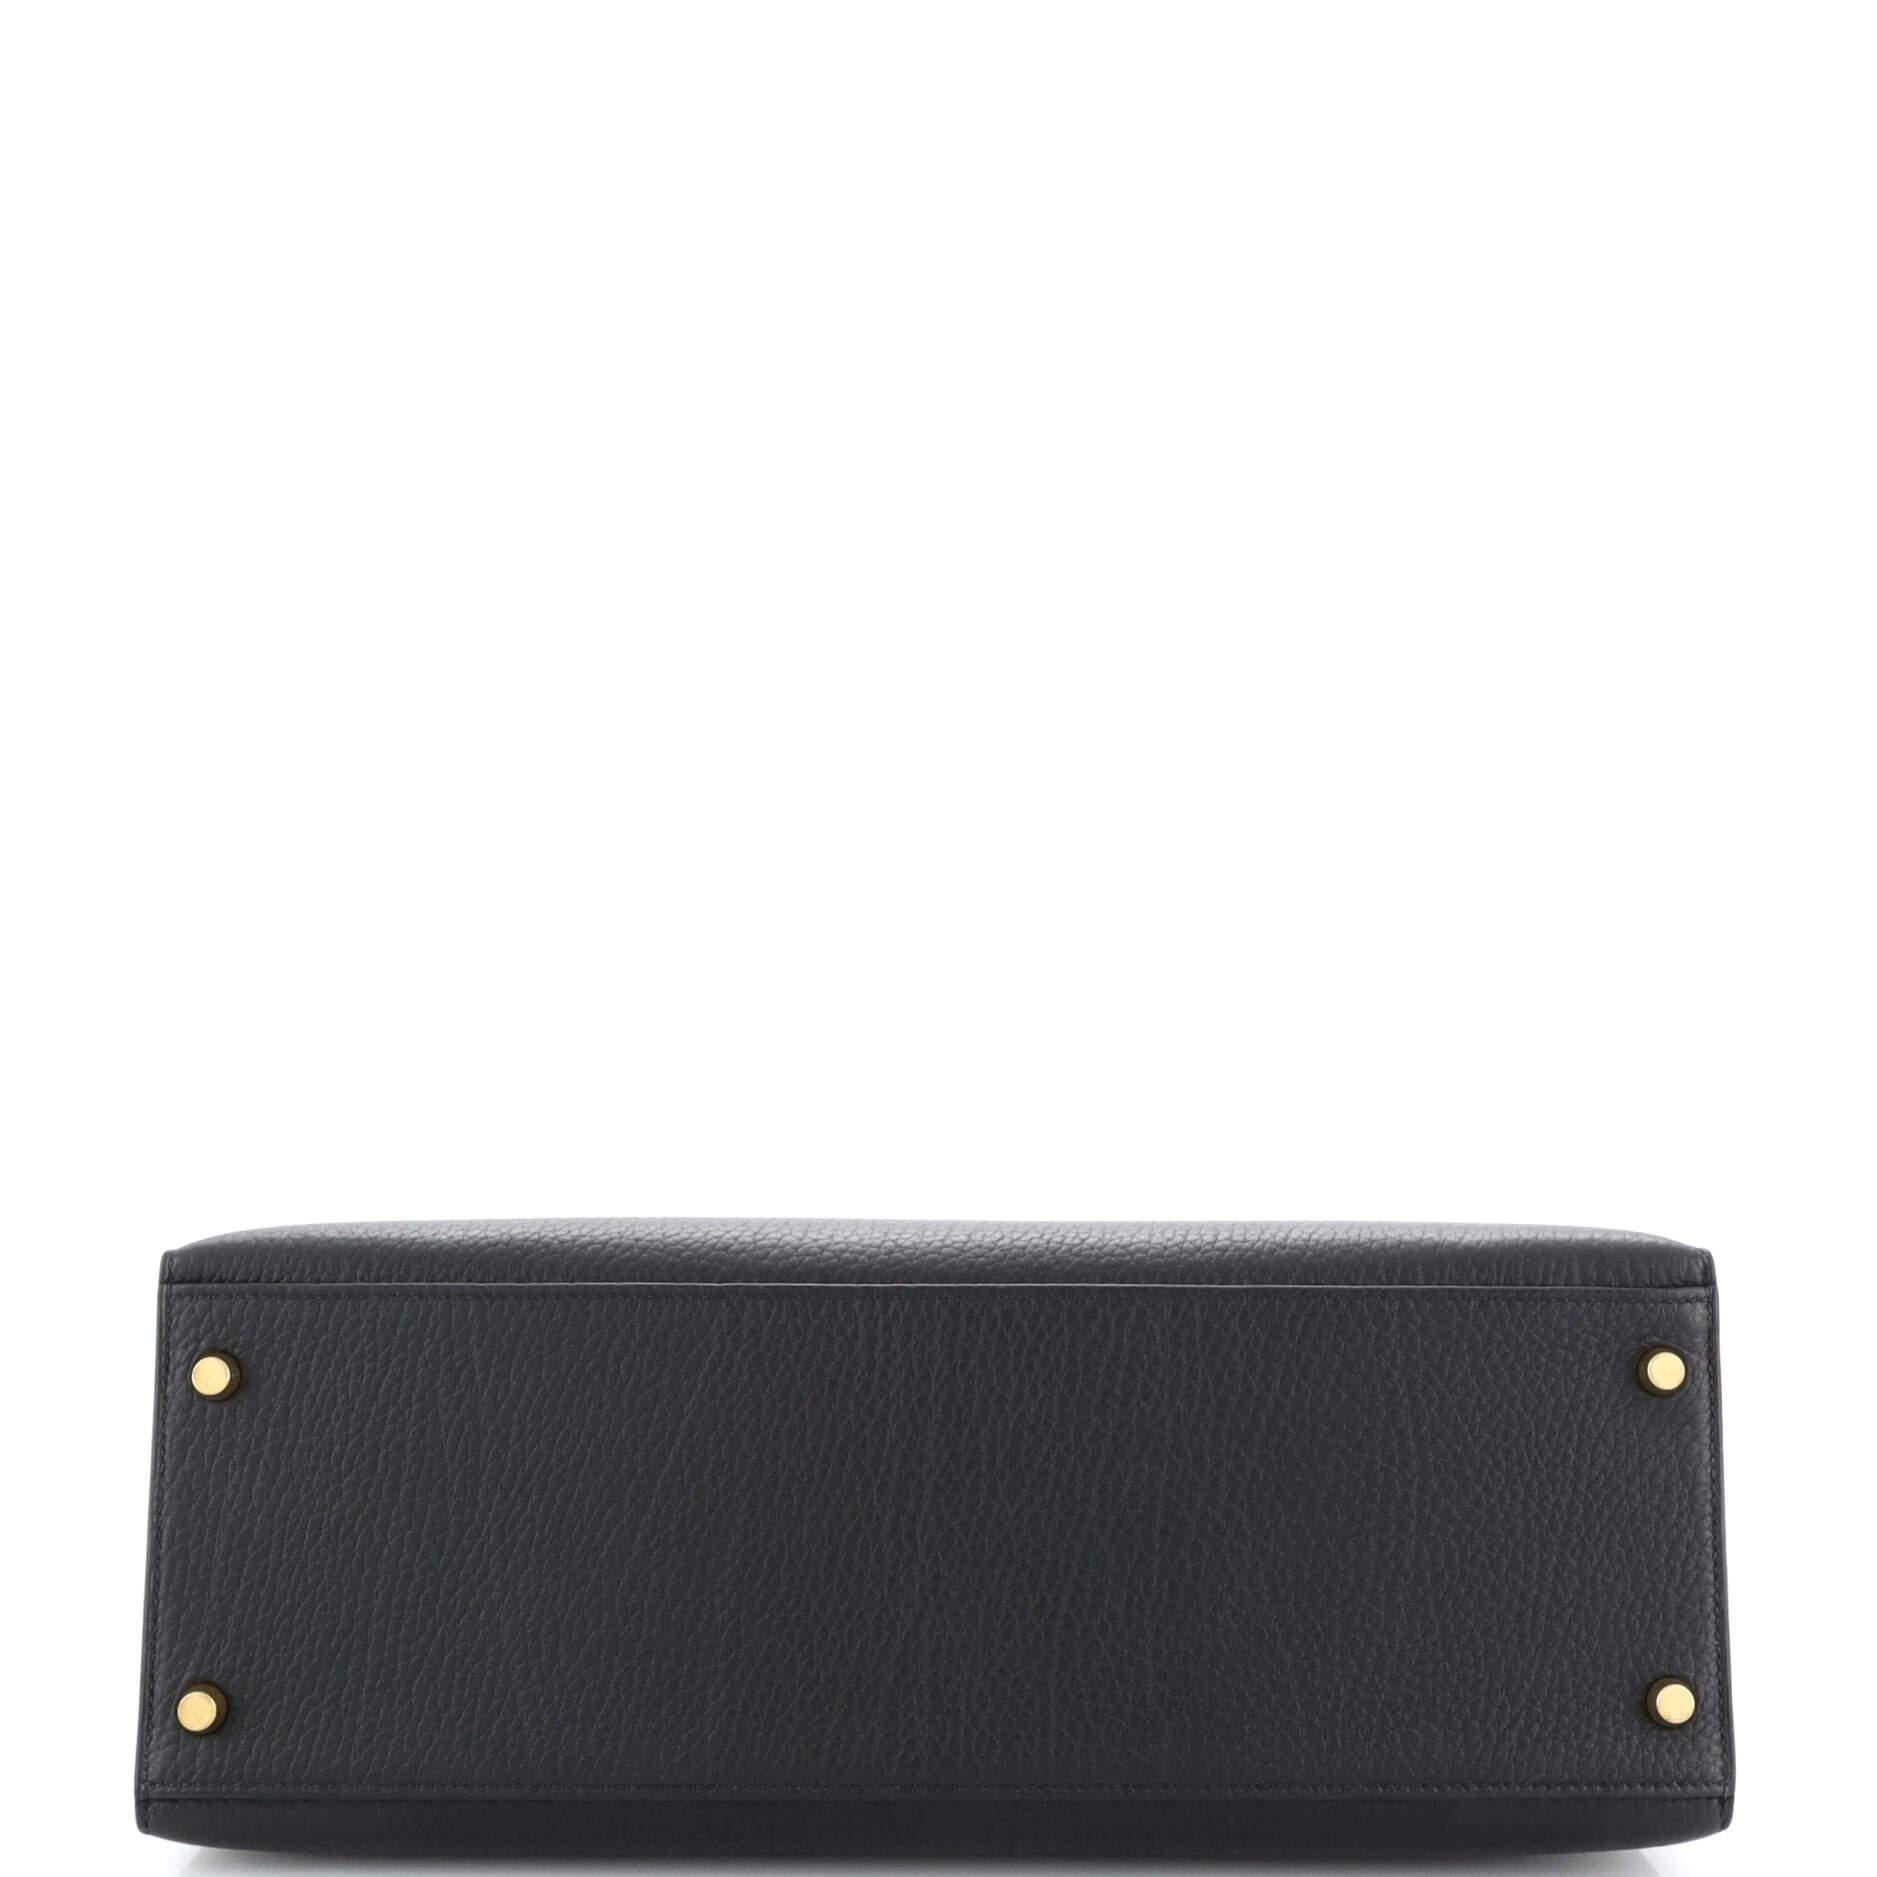 Hermes Kelly Handbag Noir Fjord with Gold Hardware 35 1